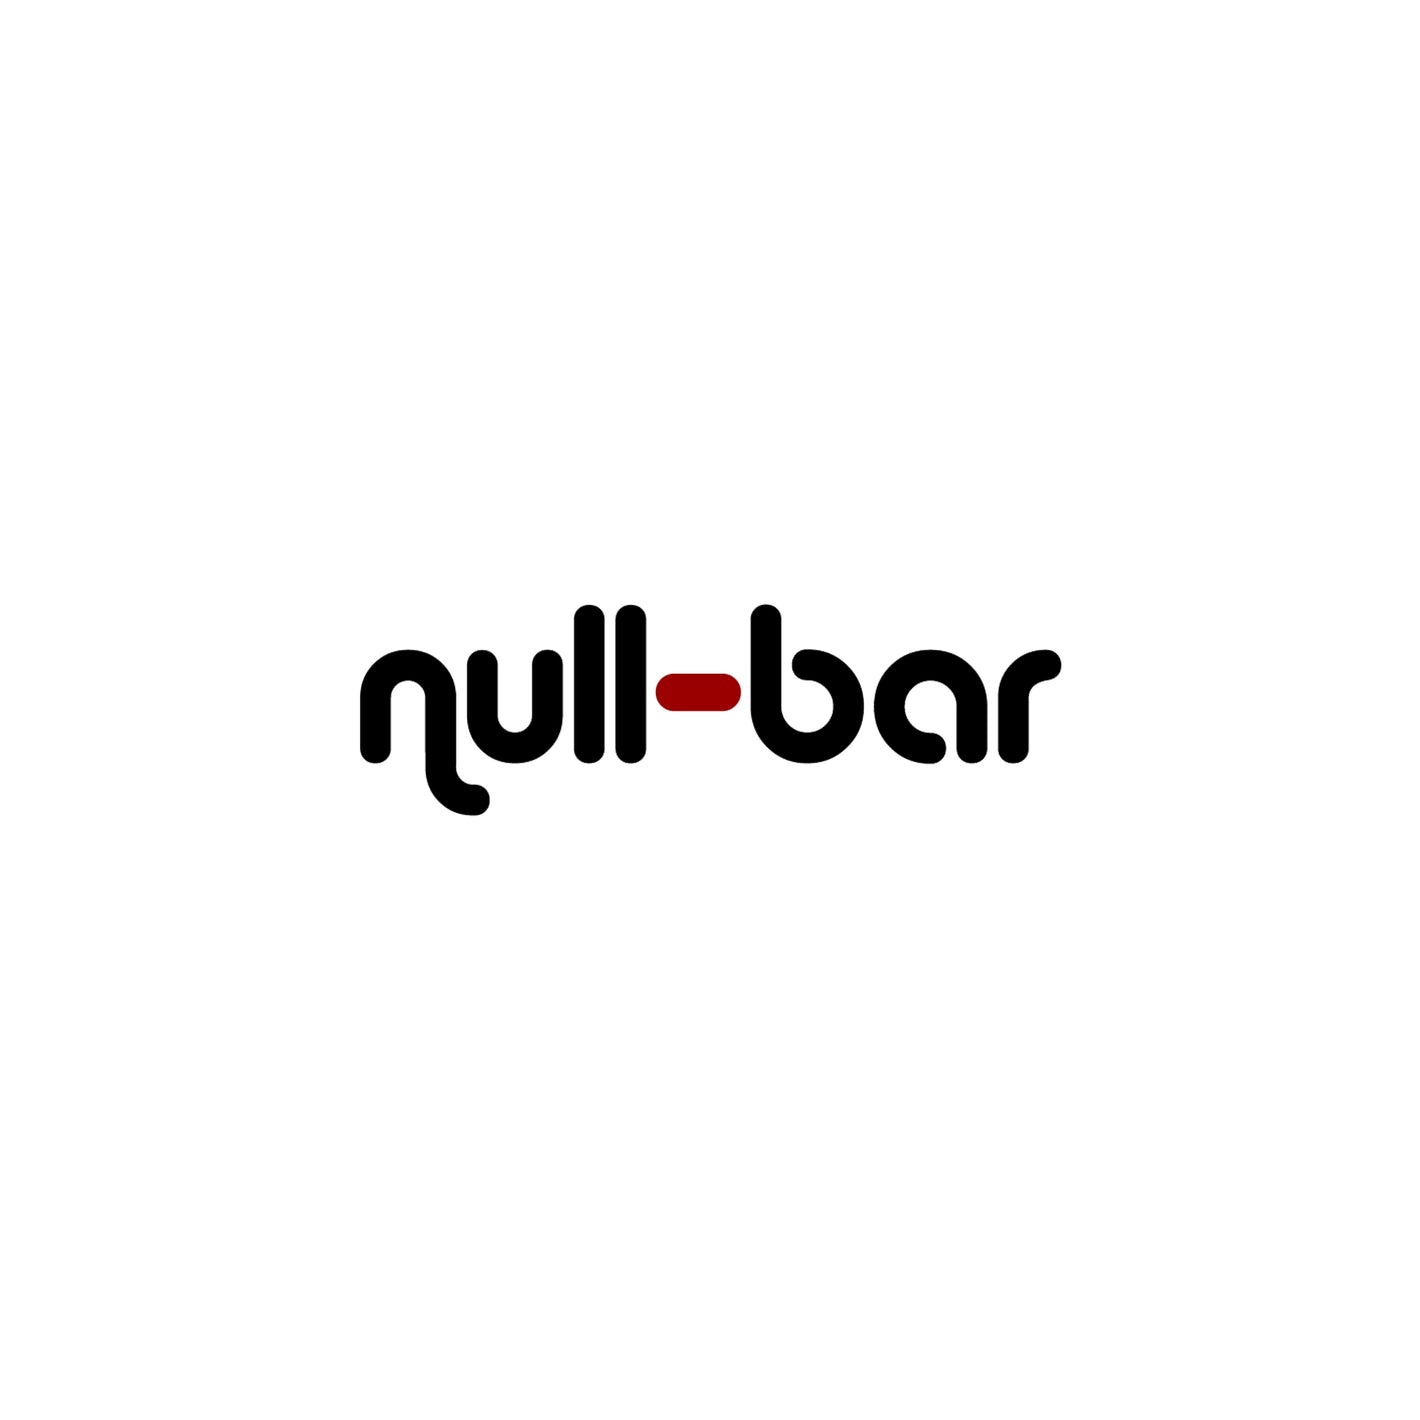 Null-Bar